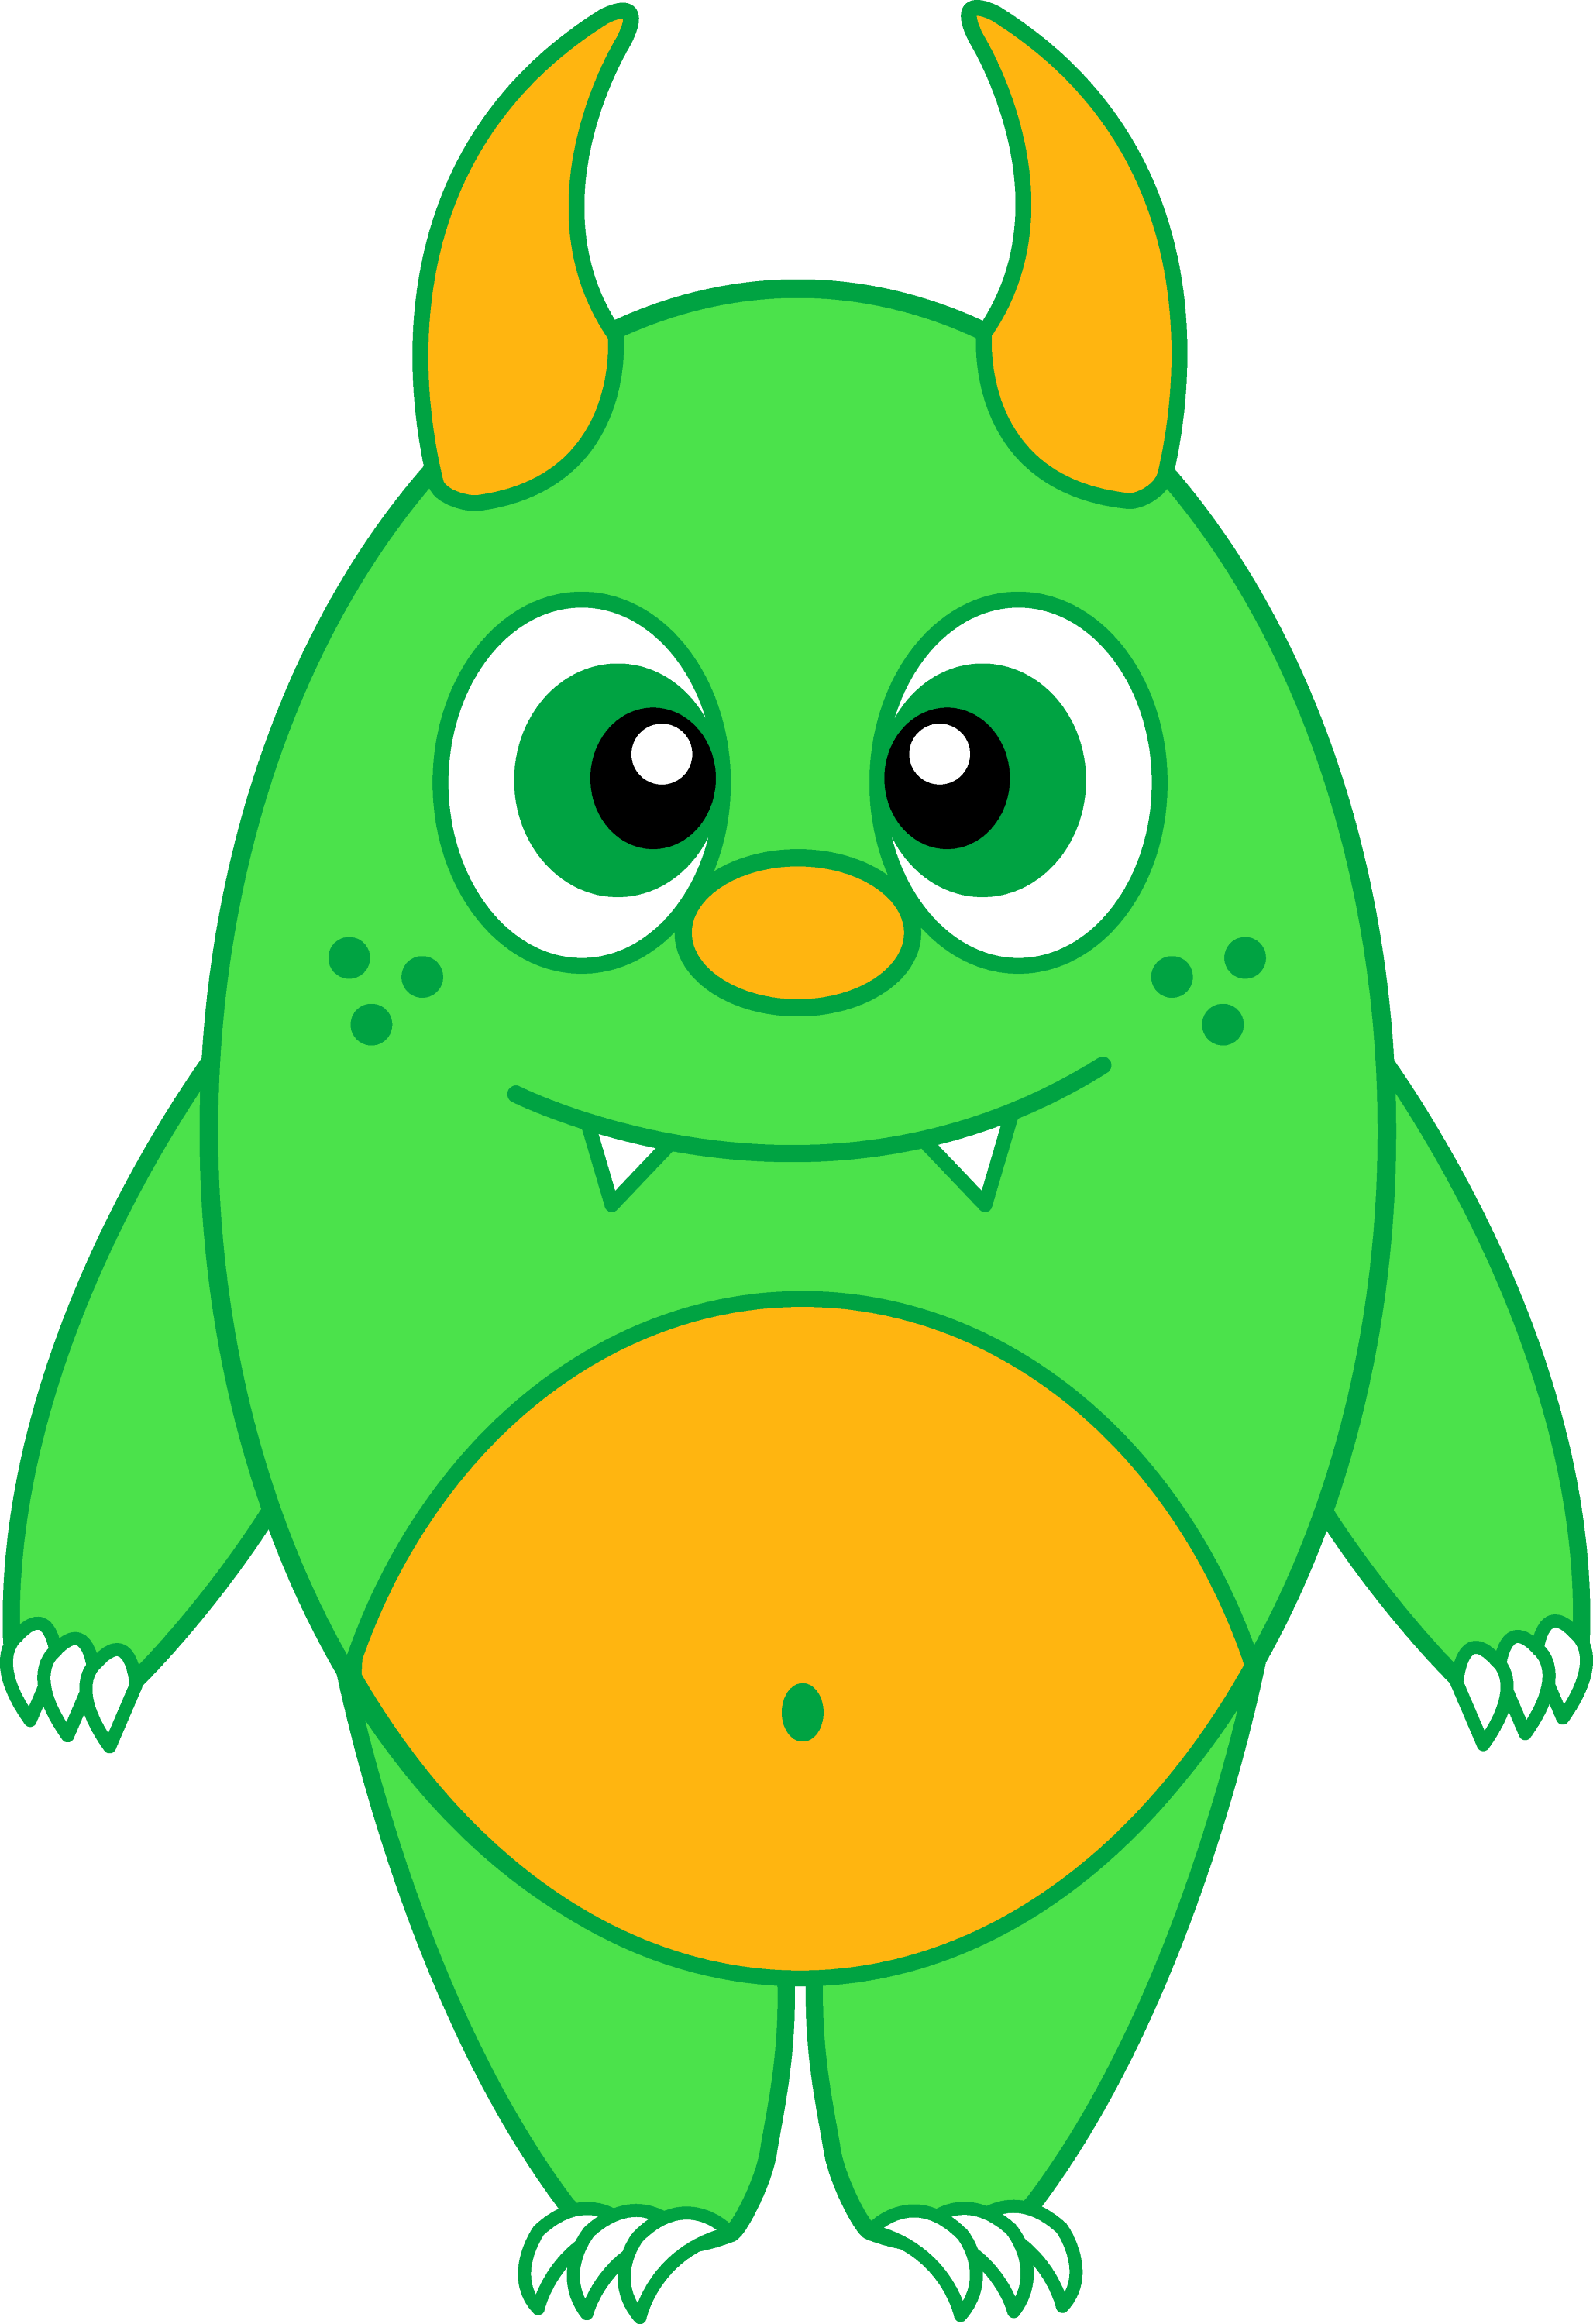 Silly Little Green Monster - Free Clip Art